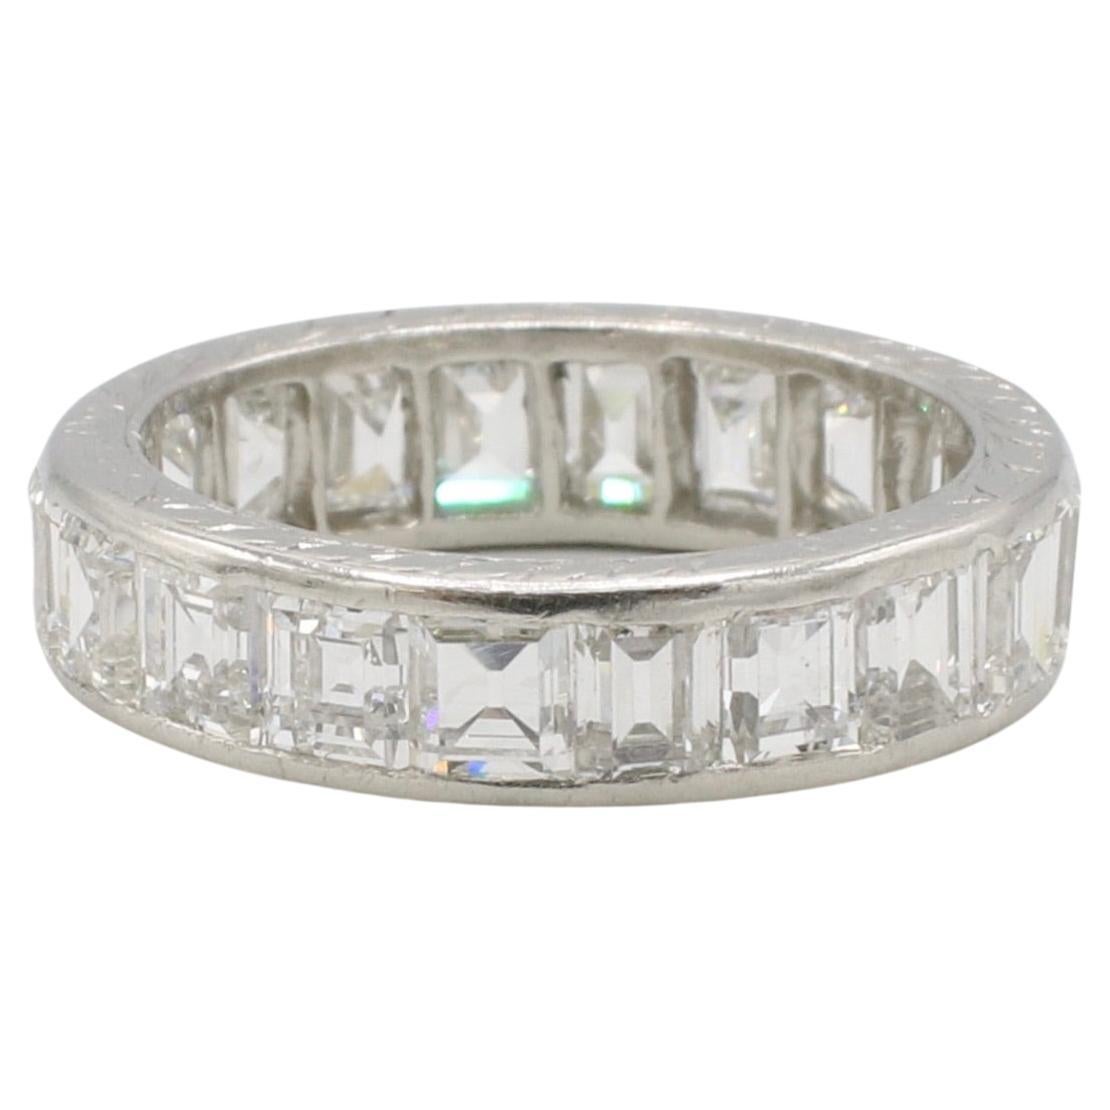 Art Deco Platinum Antique Carré Square Cut Natural Diamond Eternity Band Wedding Ring
Metal: Platinum
Weight: 3.8 grams
Diamonds: 20 antique square cut natural diamonds, approx. 3 CTW F-G VS
Width: 4.5mm
Size: 4 (US)
Note: Engraved 